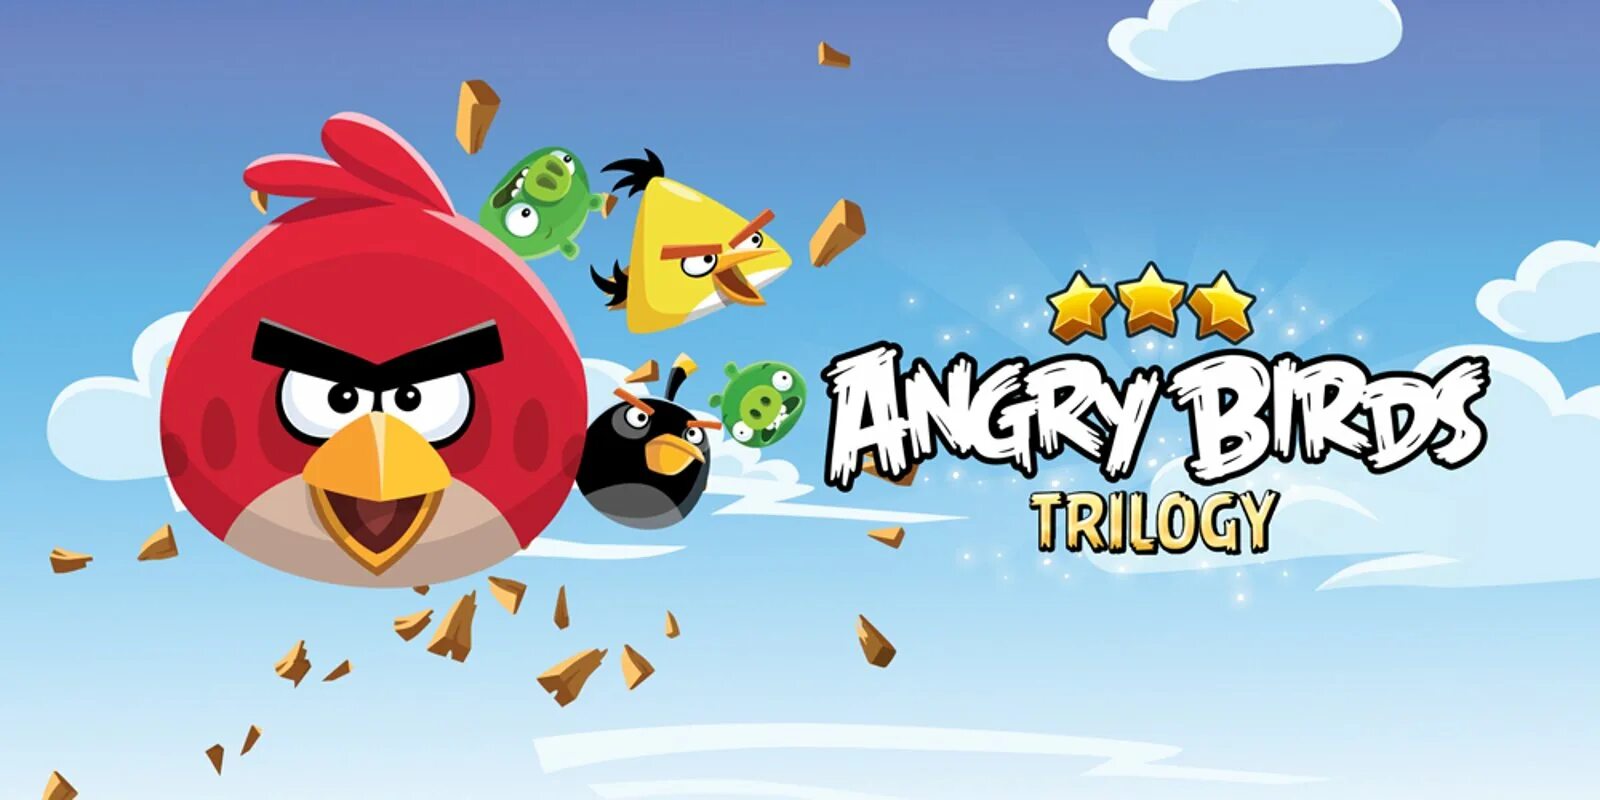 Angry birds versions. Игра Angry Birds Trilogy. Энгри бердз 2009. Ровио Энгри бердз. Angry Birds первая игра.